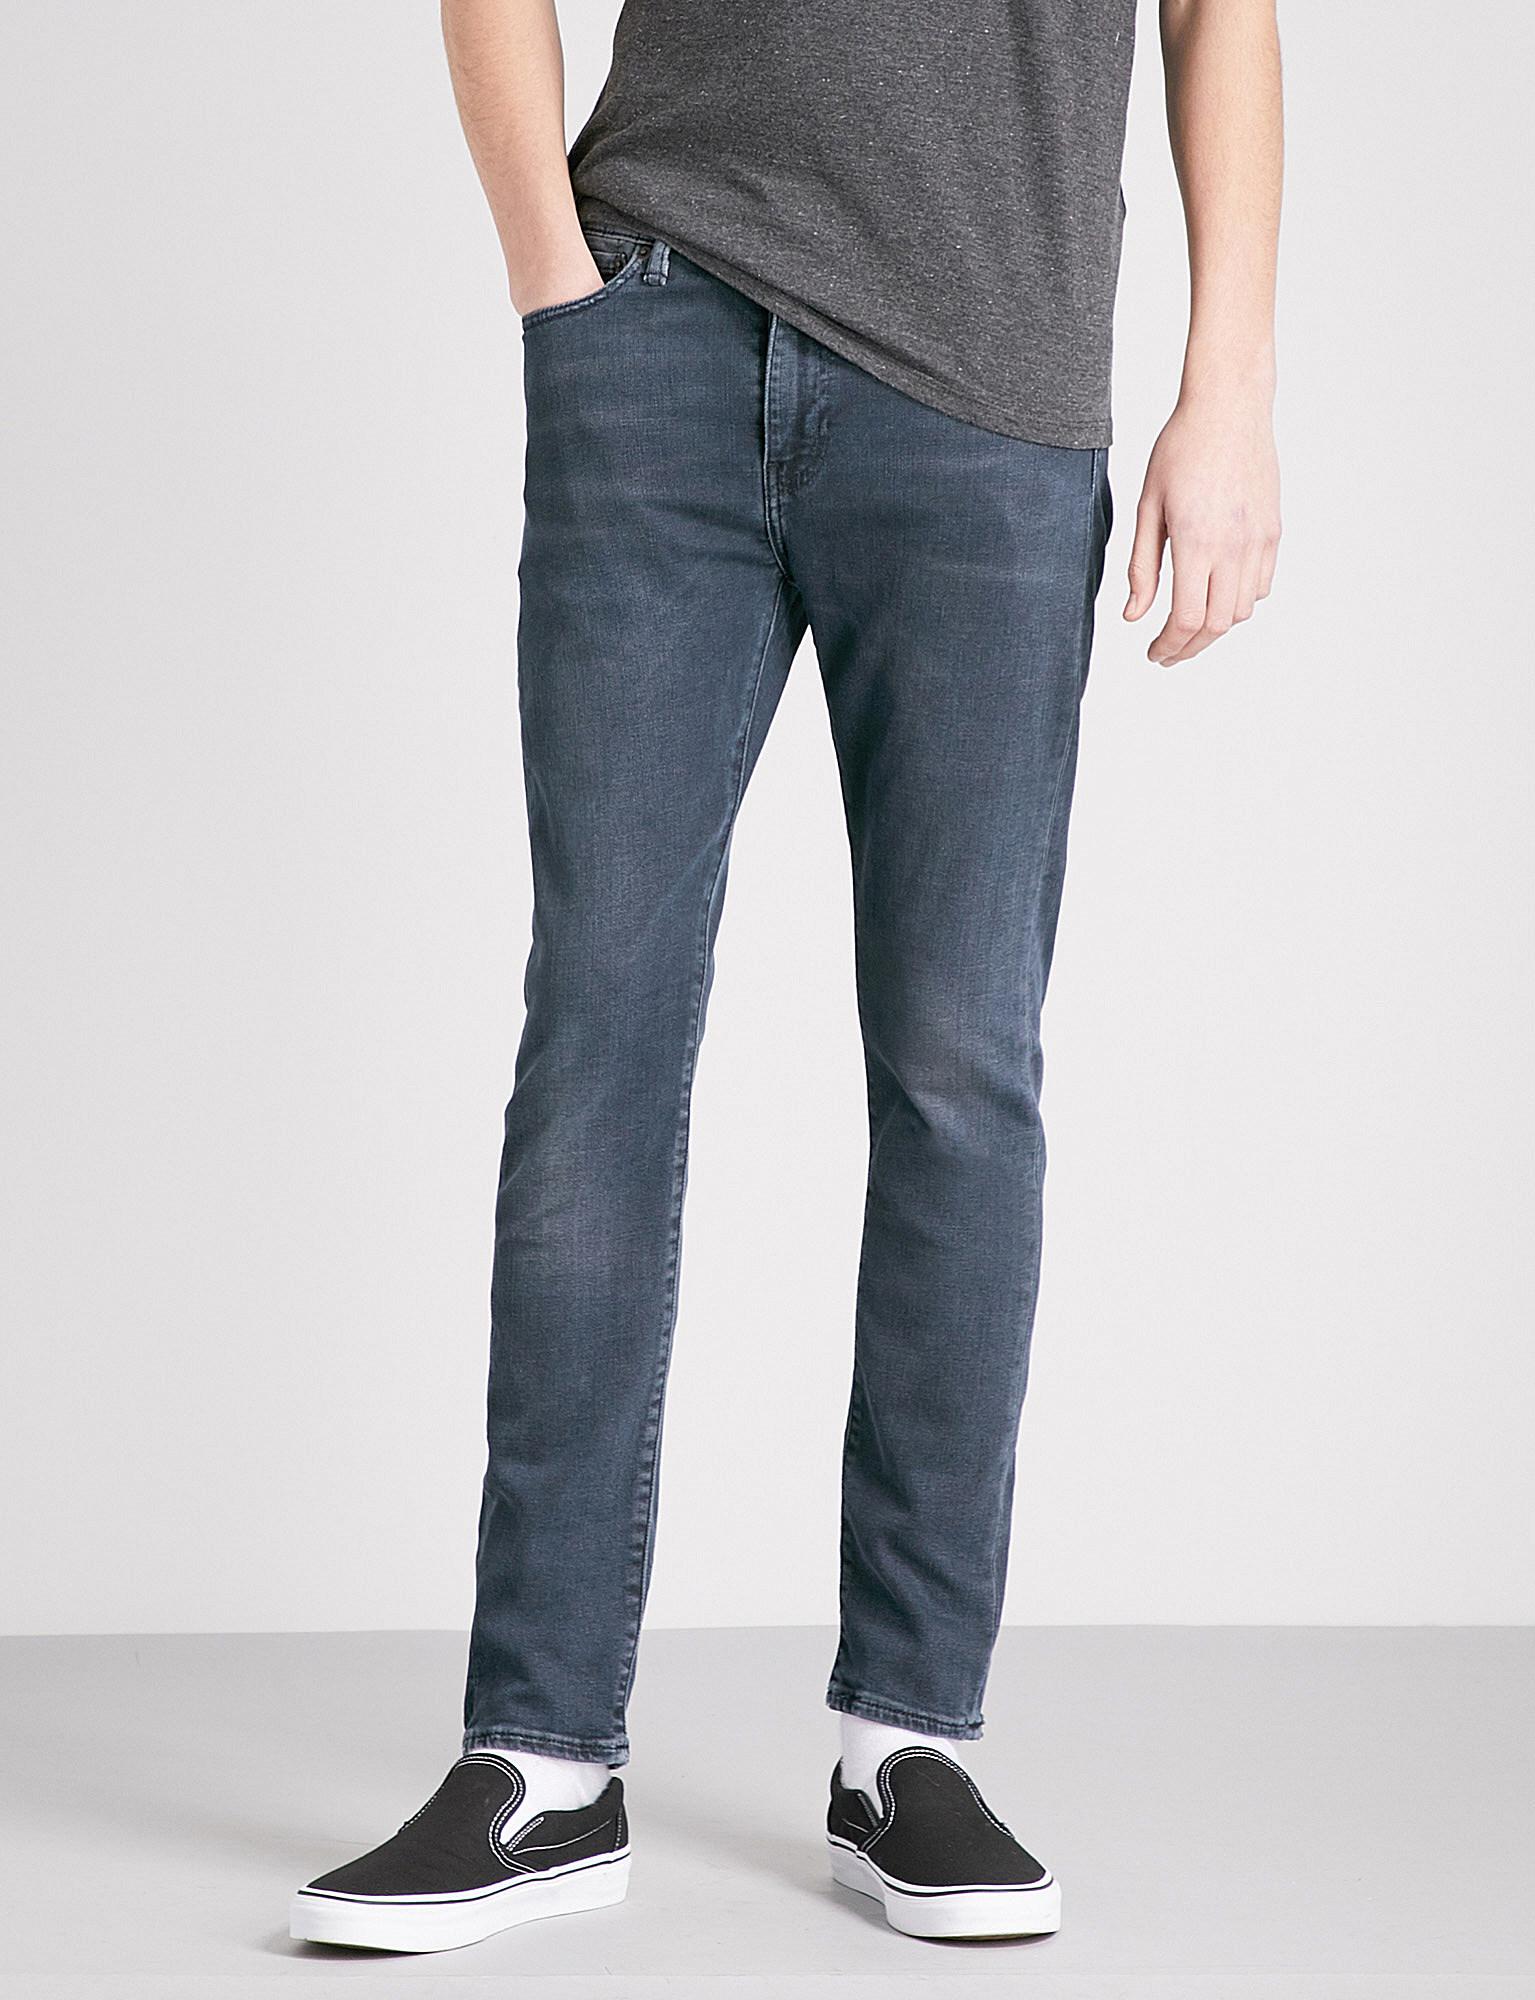 Lyst - Levi'S 510 Slim-fit Skinny Jeans in Blue for Men